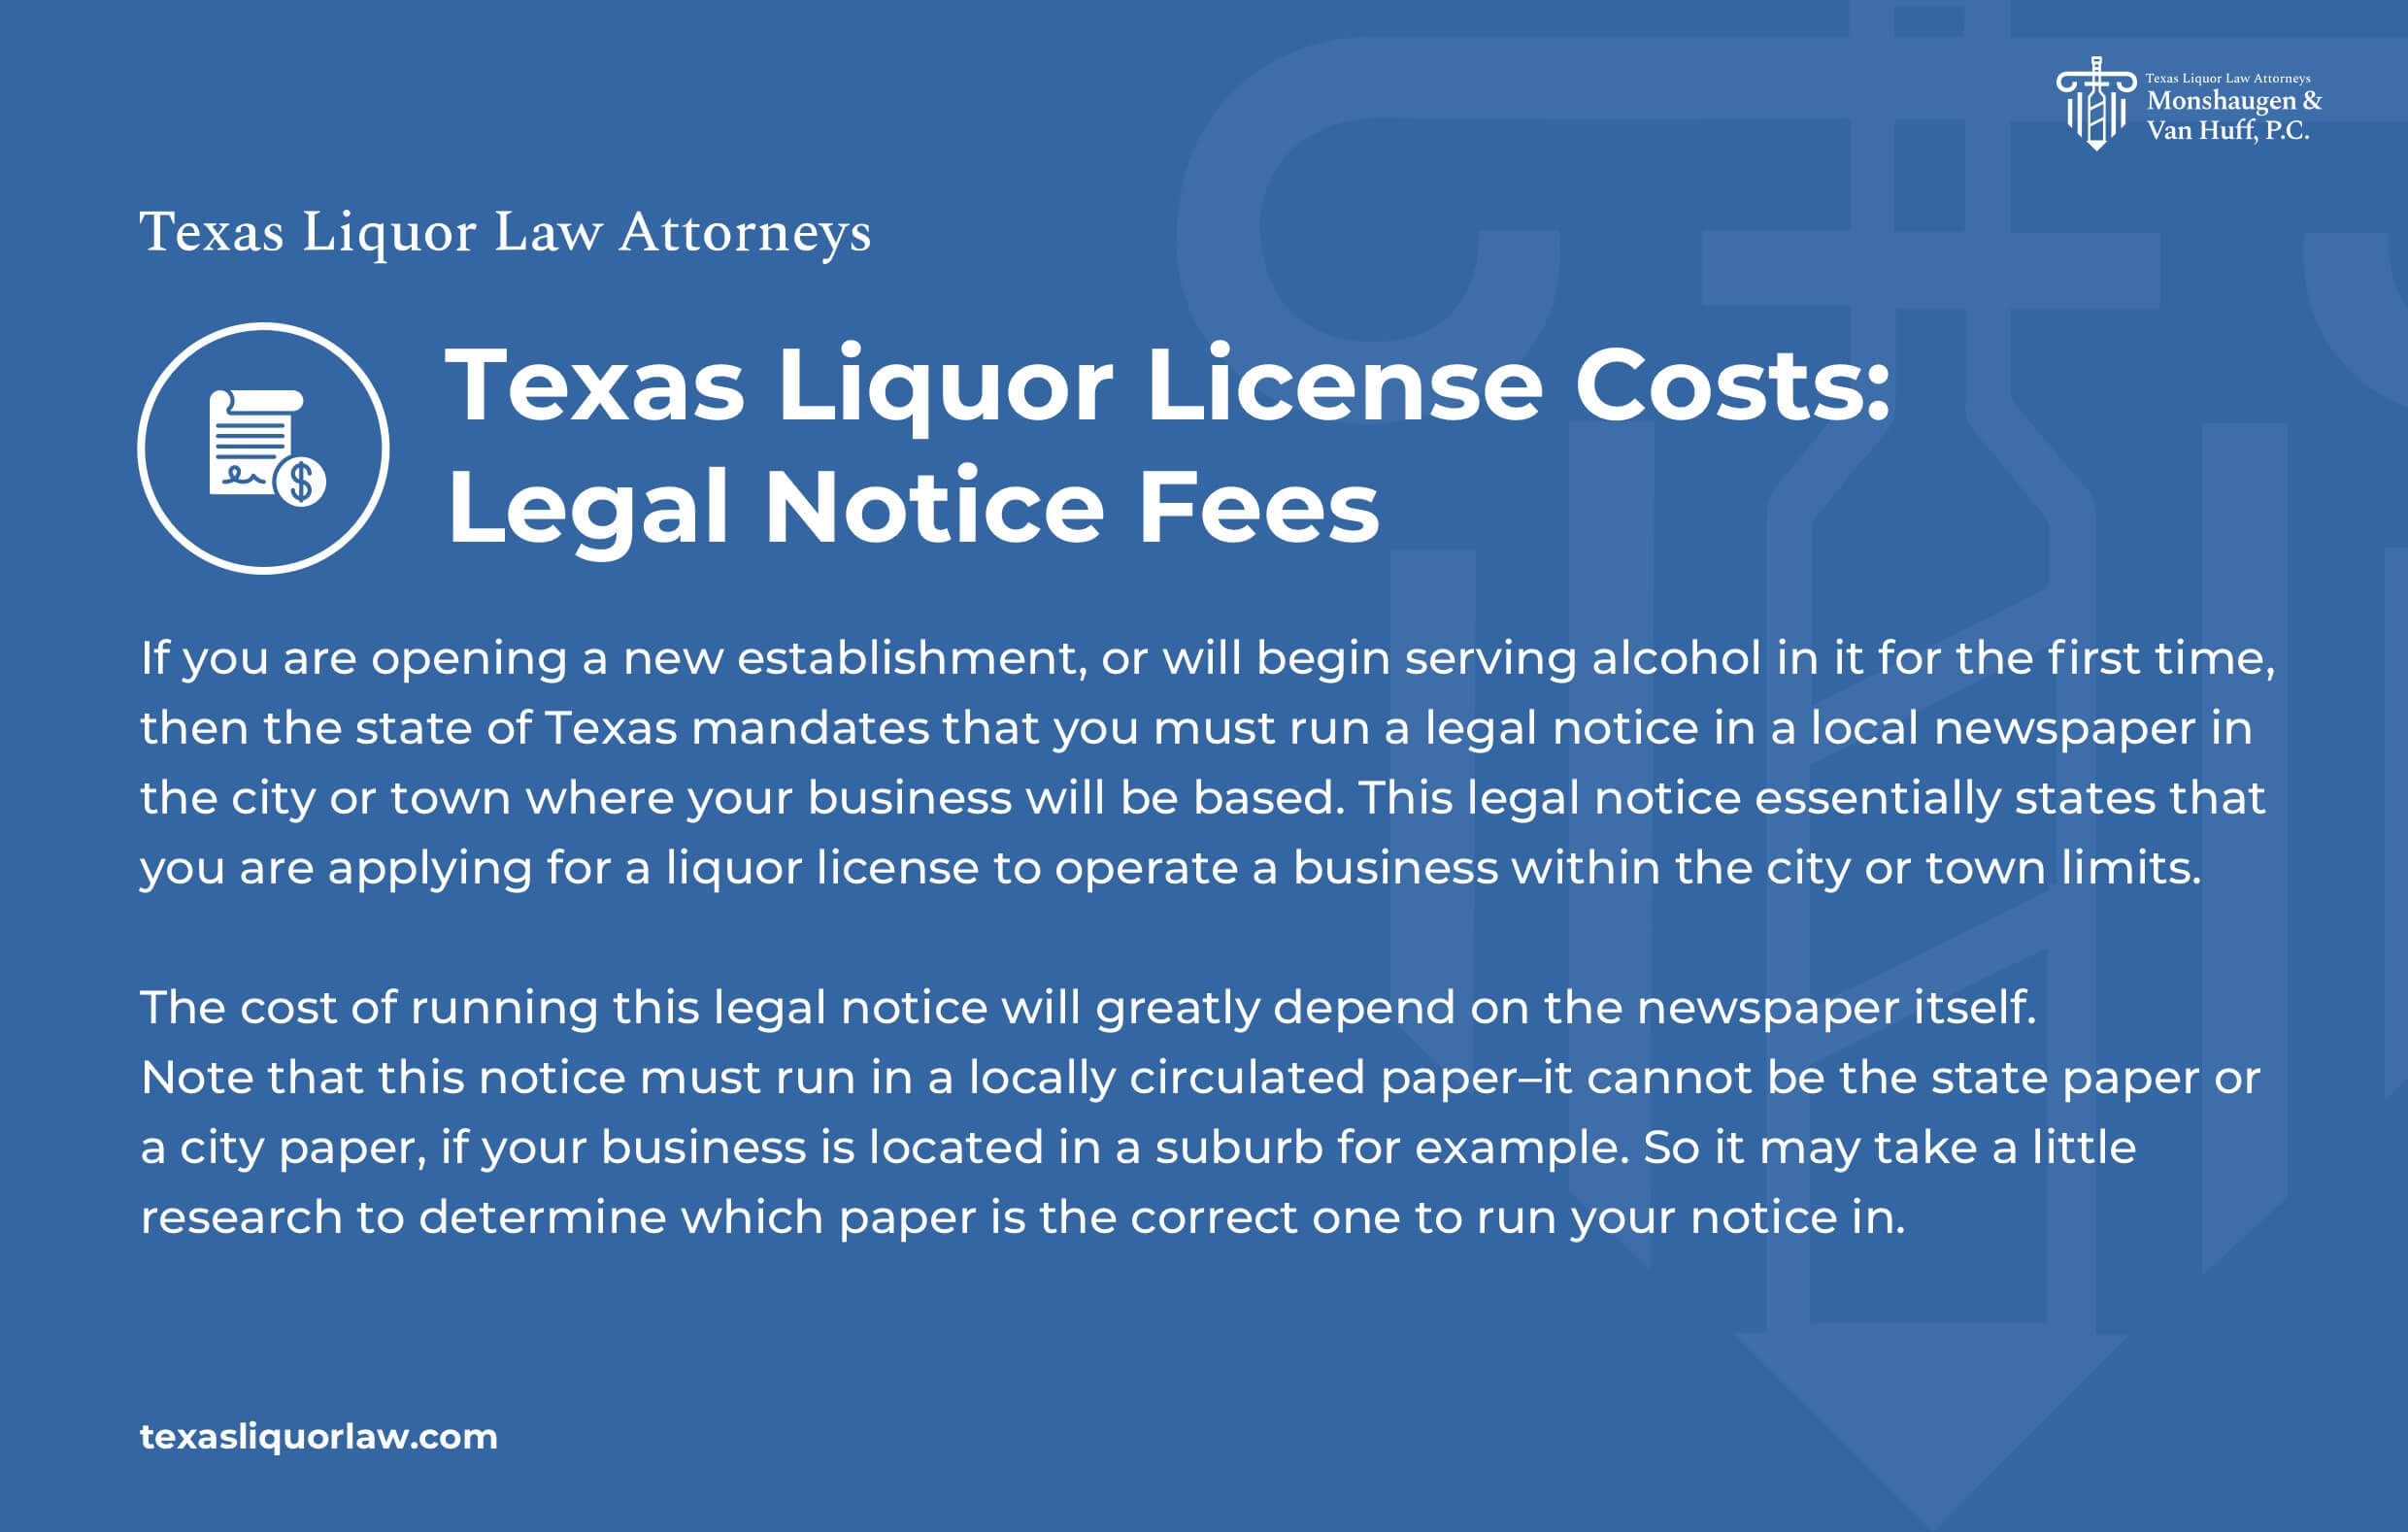 Legal Notice Fees Texas Liquor License Costs